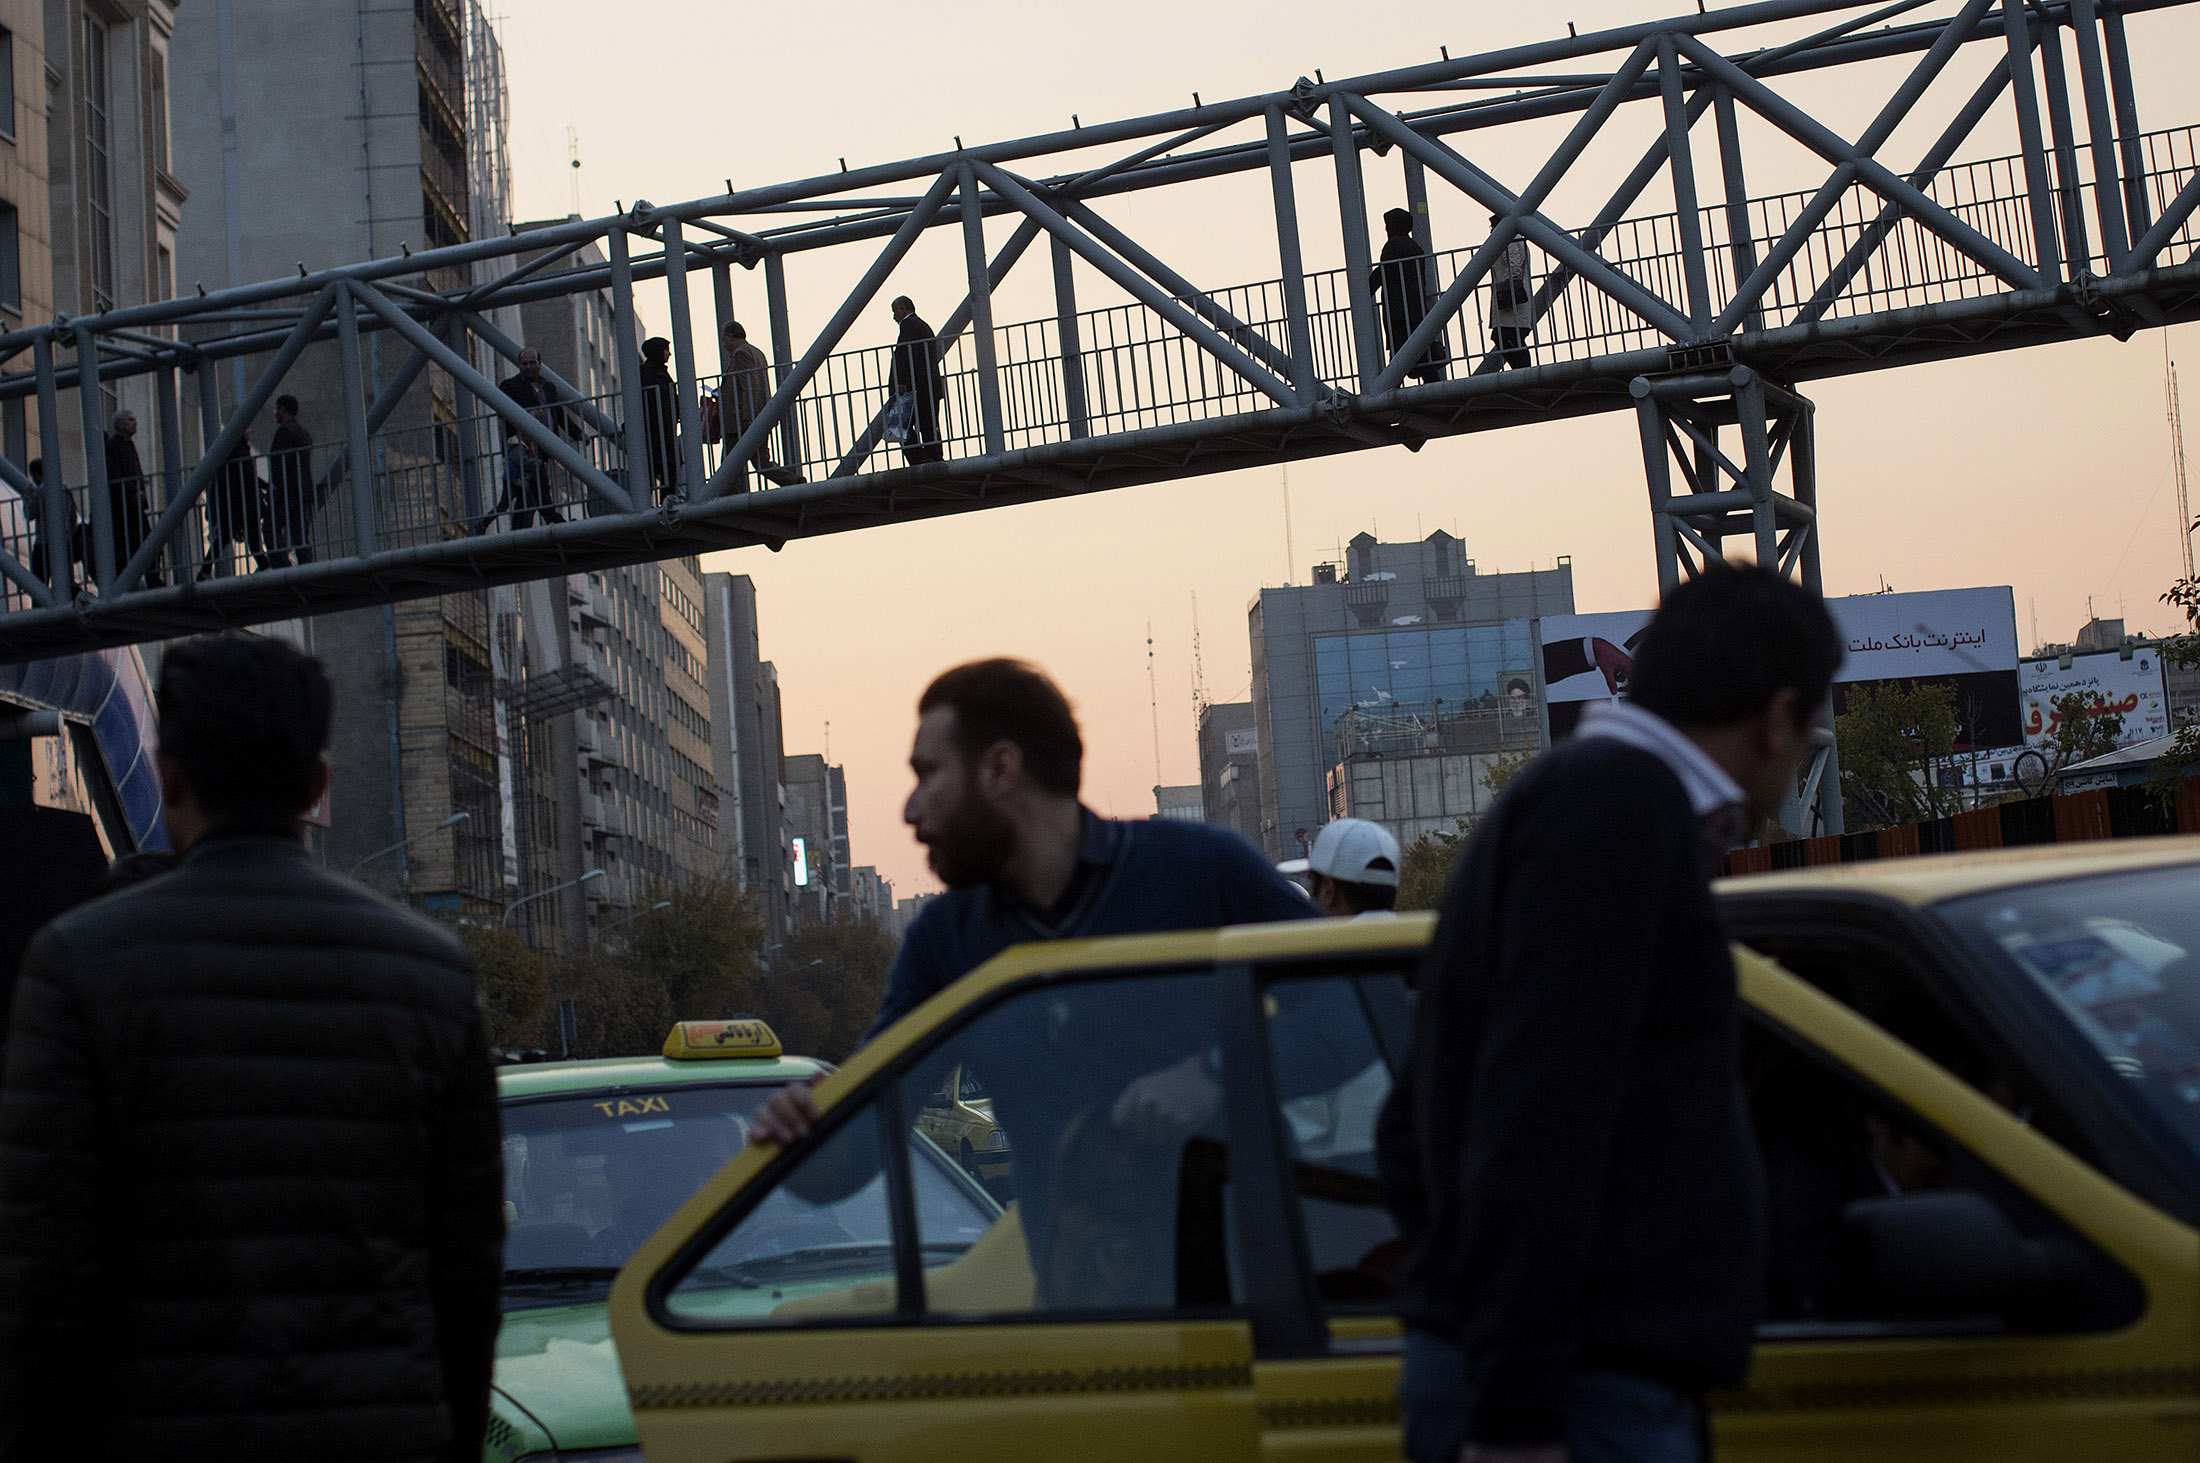 A commuter exits a taxi as pedestrians use a footbridge overhead on 7 E Tir Square in Tehran, Iran.
